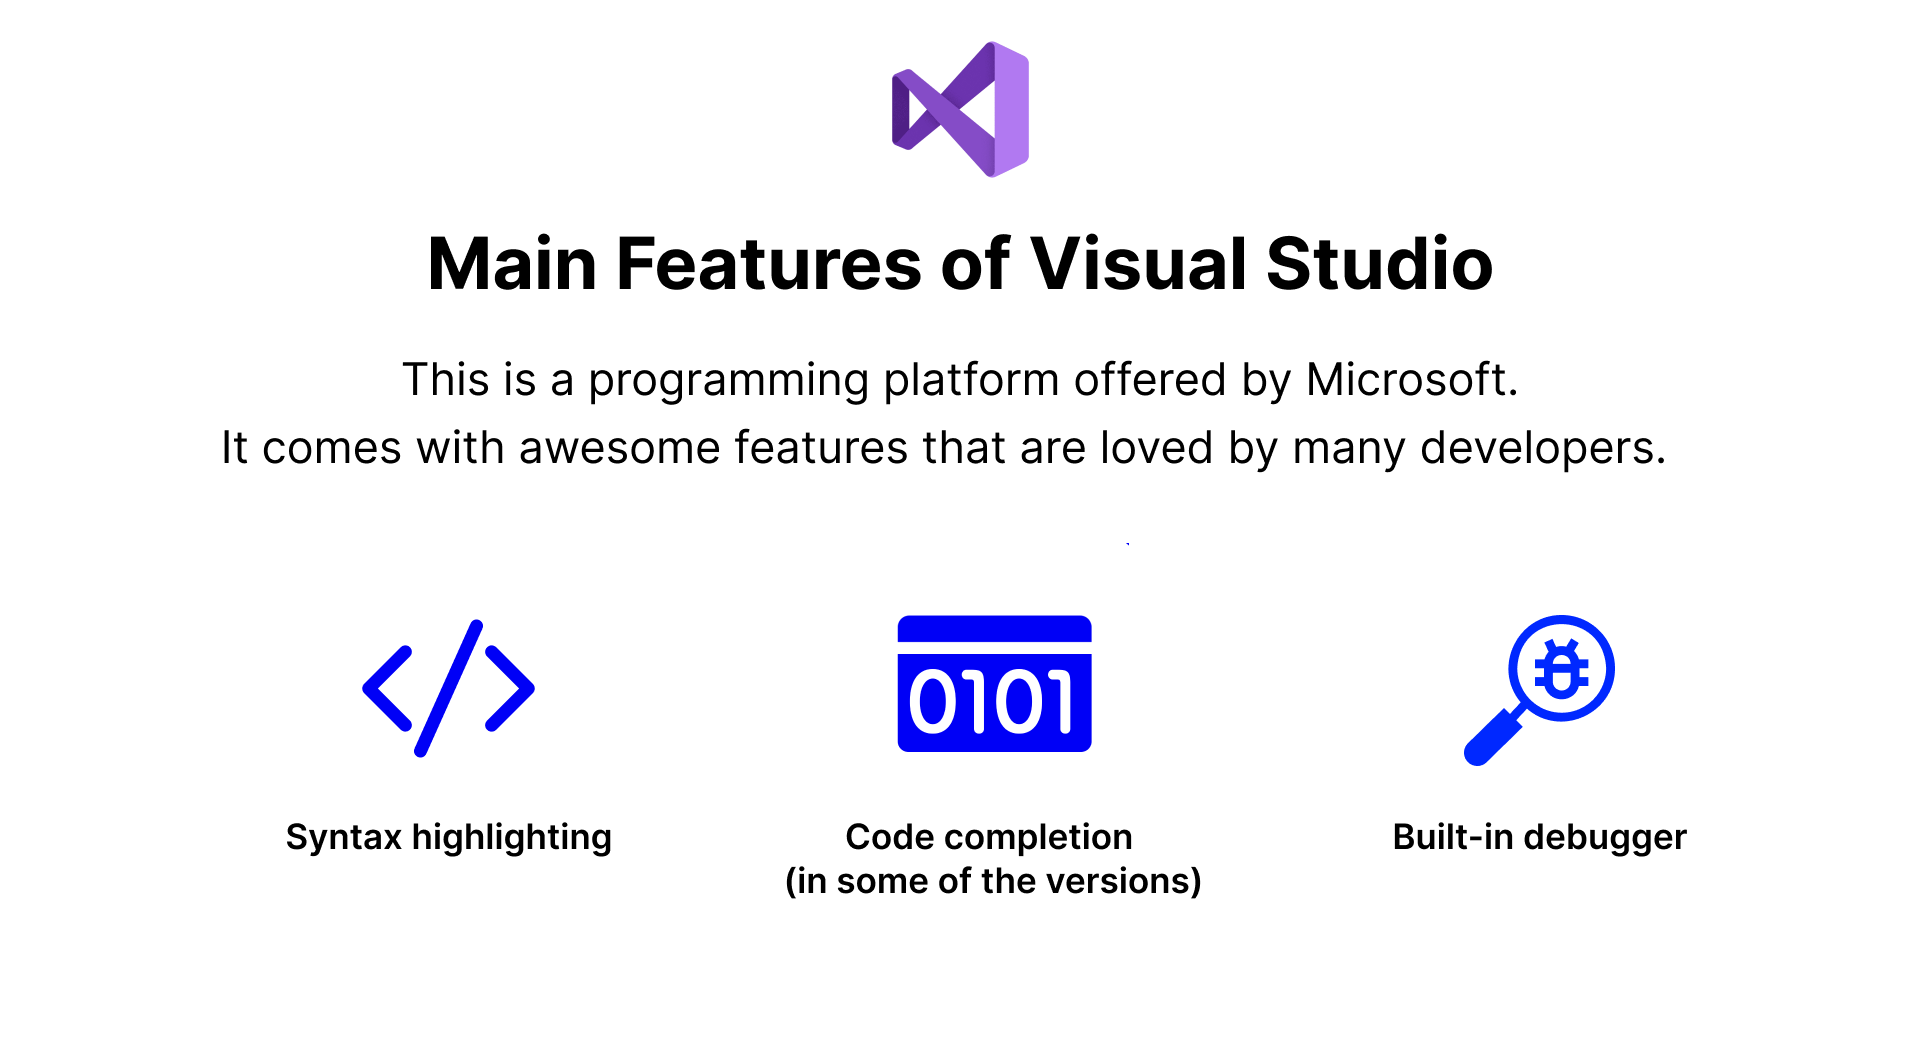 Main Features of Visual Studio